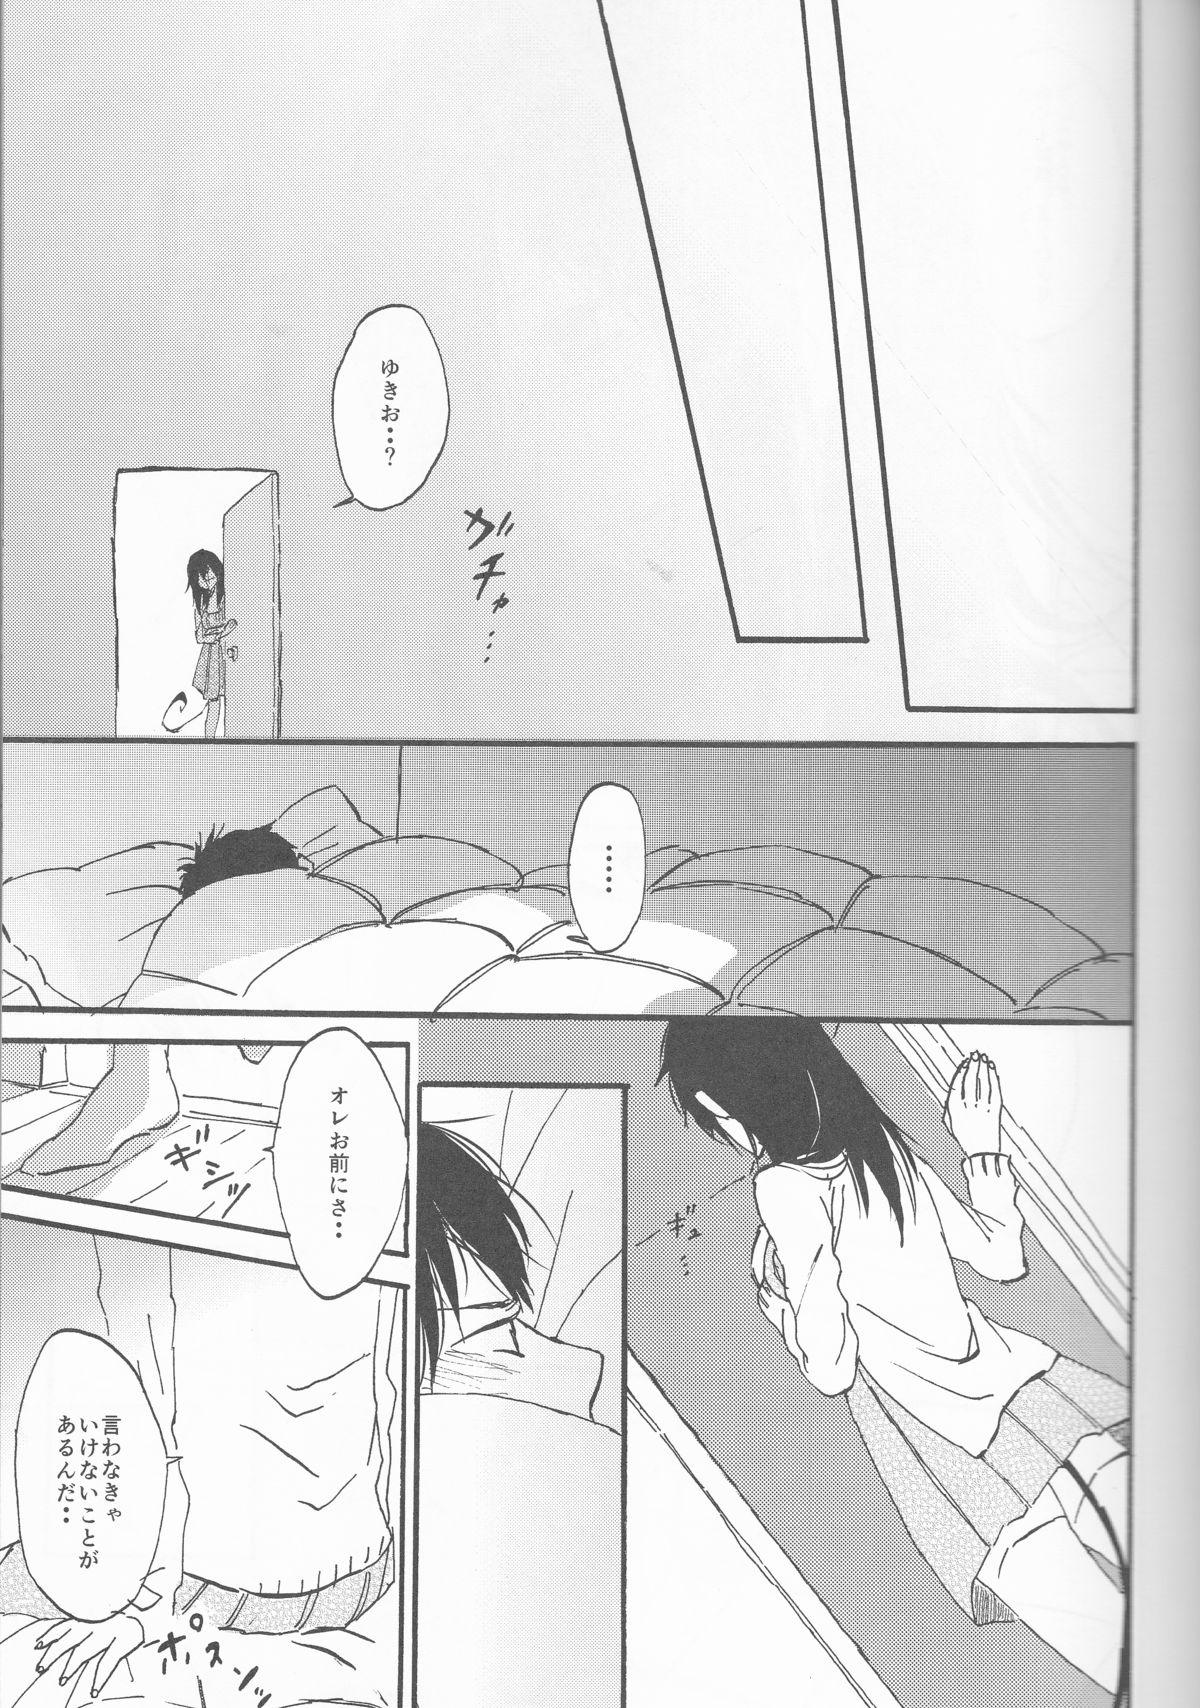 Behind 雪男*燐♀アンソロジー【デリケートに好きして】 - Ao no exorcist Animated - Page 10